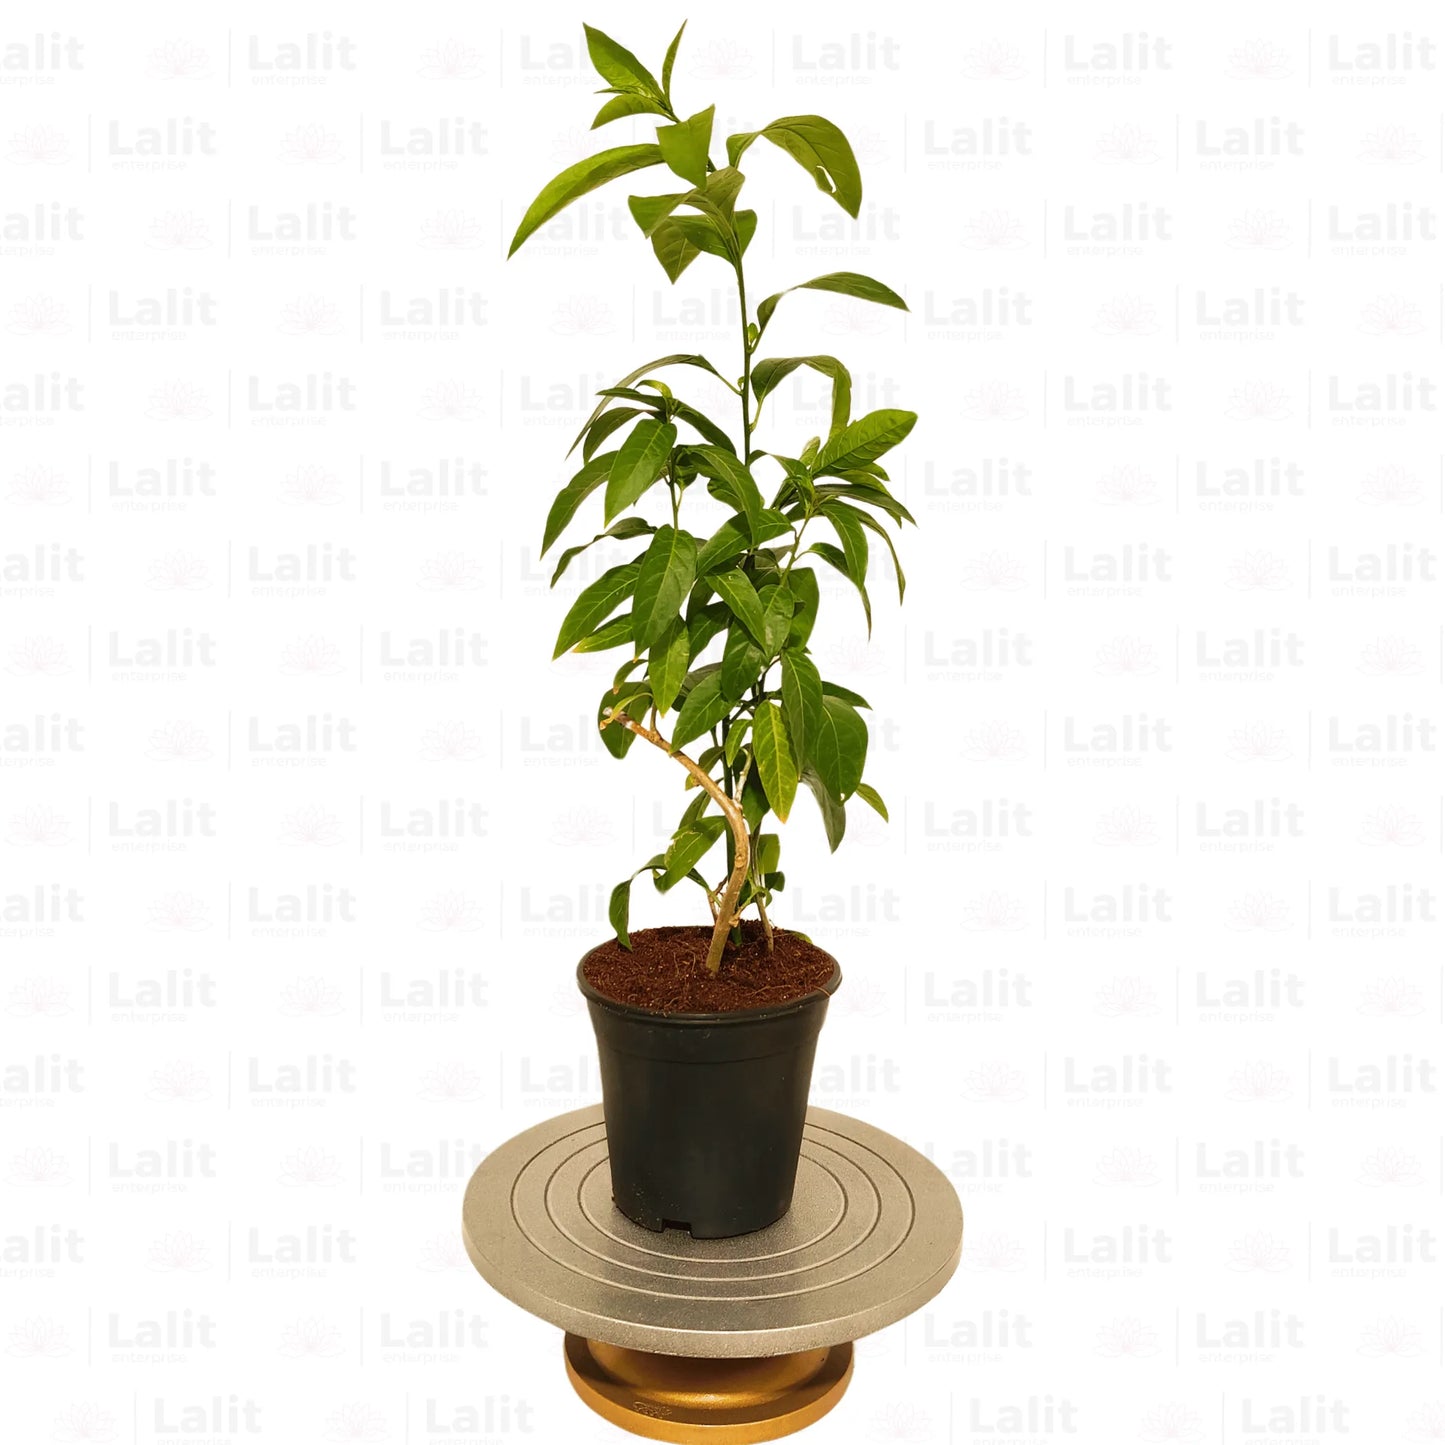 Buy Raat Ki Rani, Raat Rani, Night Blooming Jasmine – Plant Online at Lalitenterprise